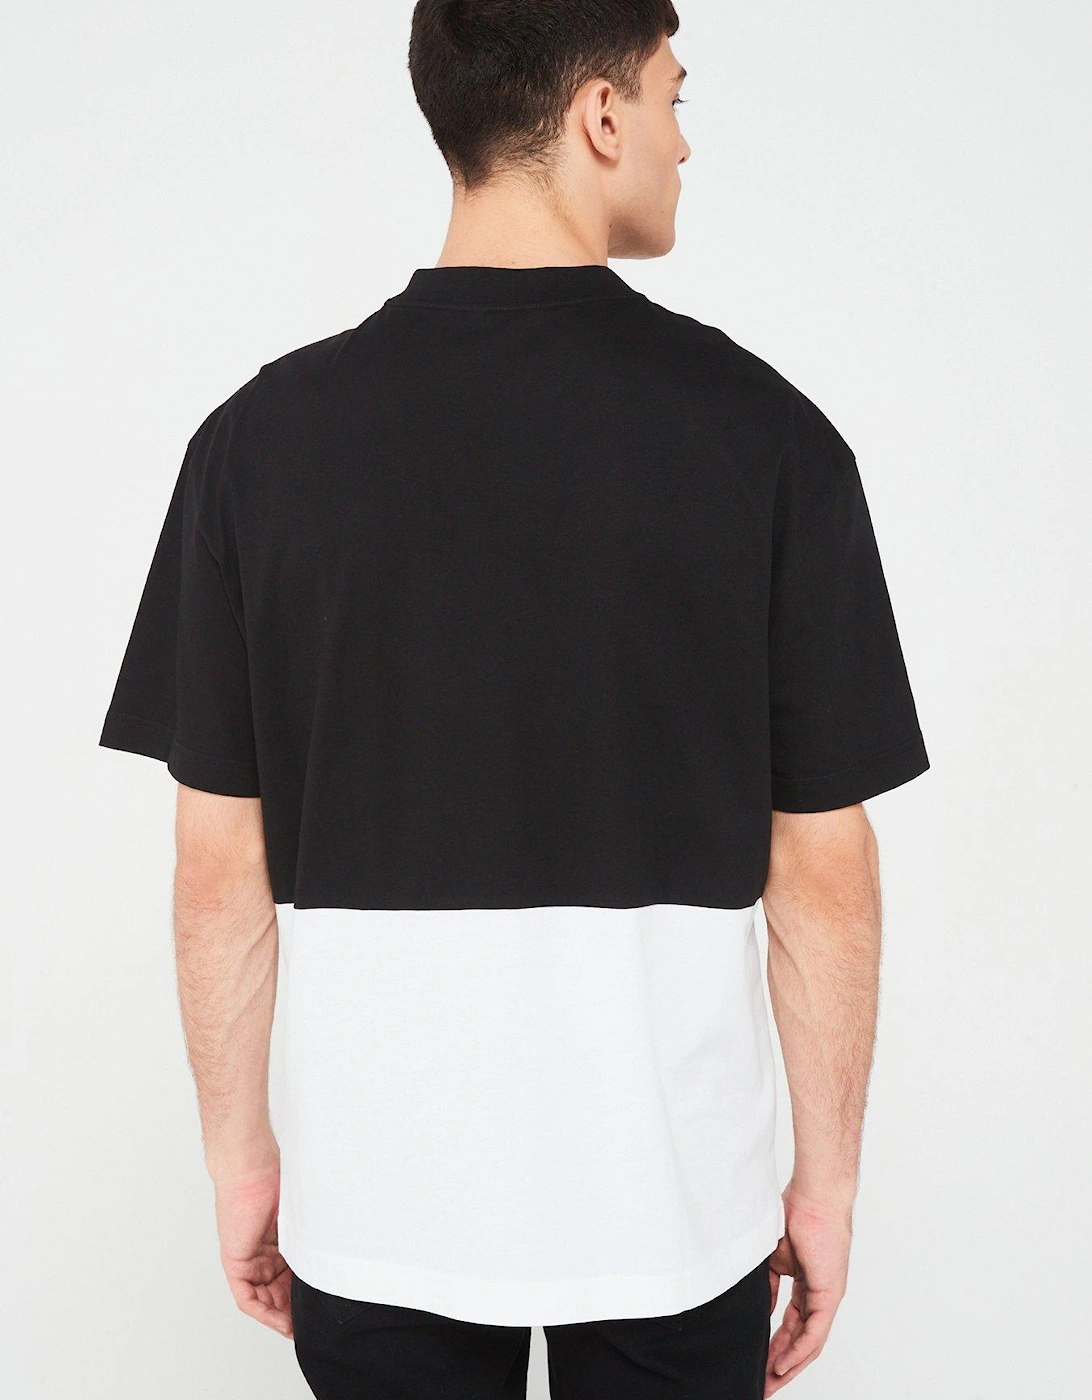 Colourblock Oversized T-shirt - Black/White